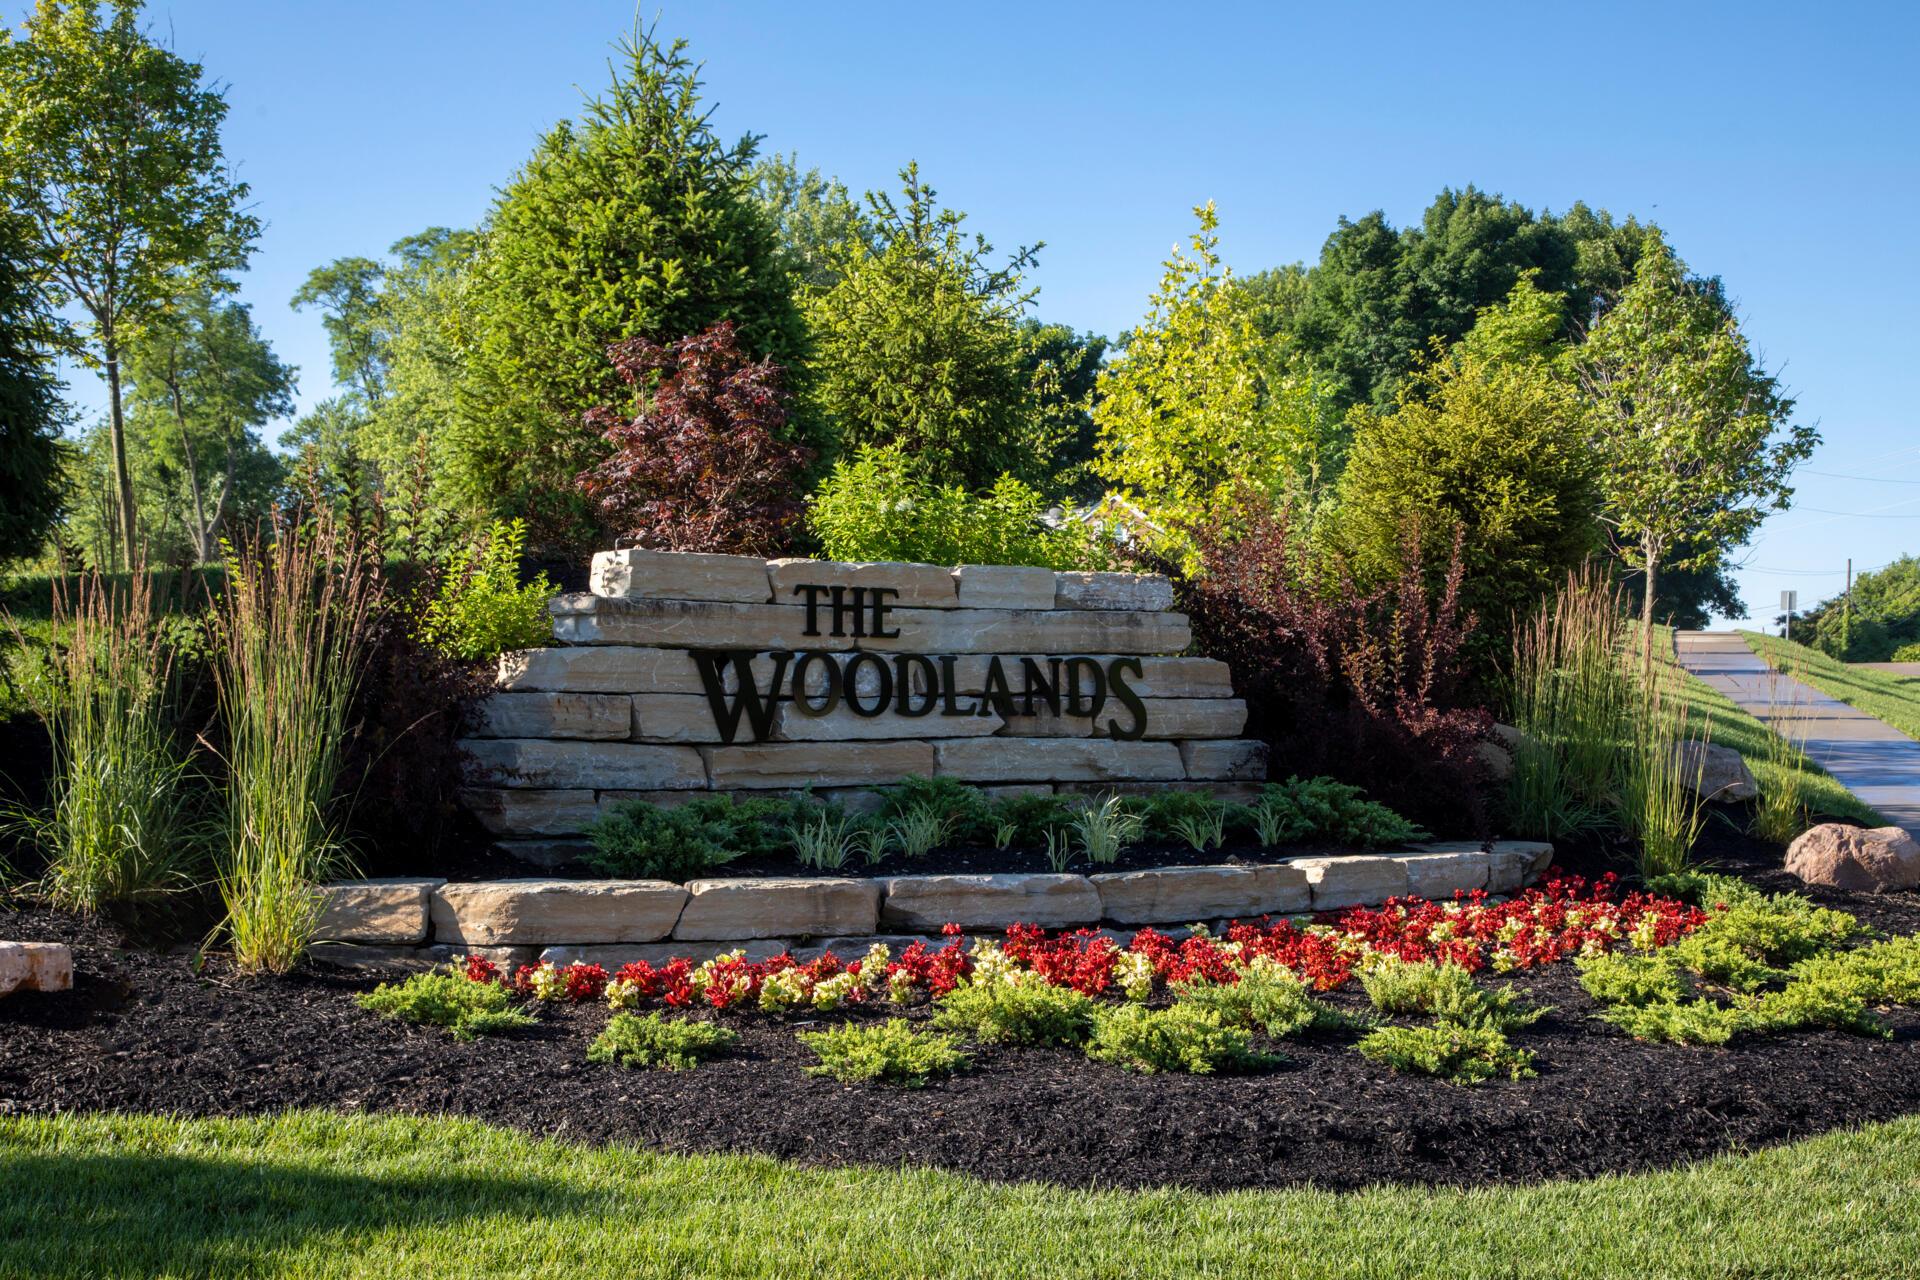 The Woodland Entrance